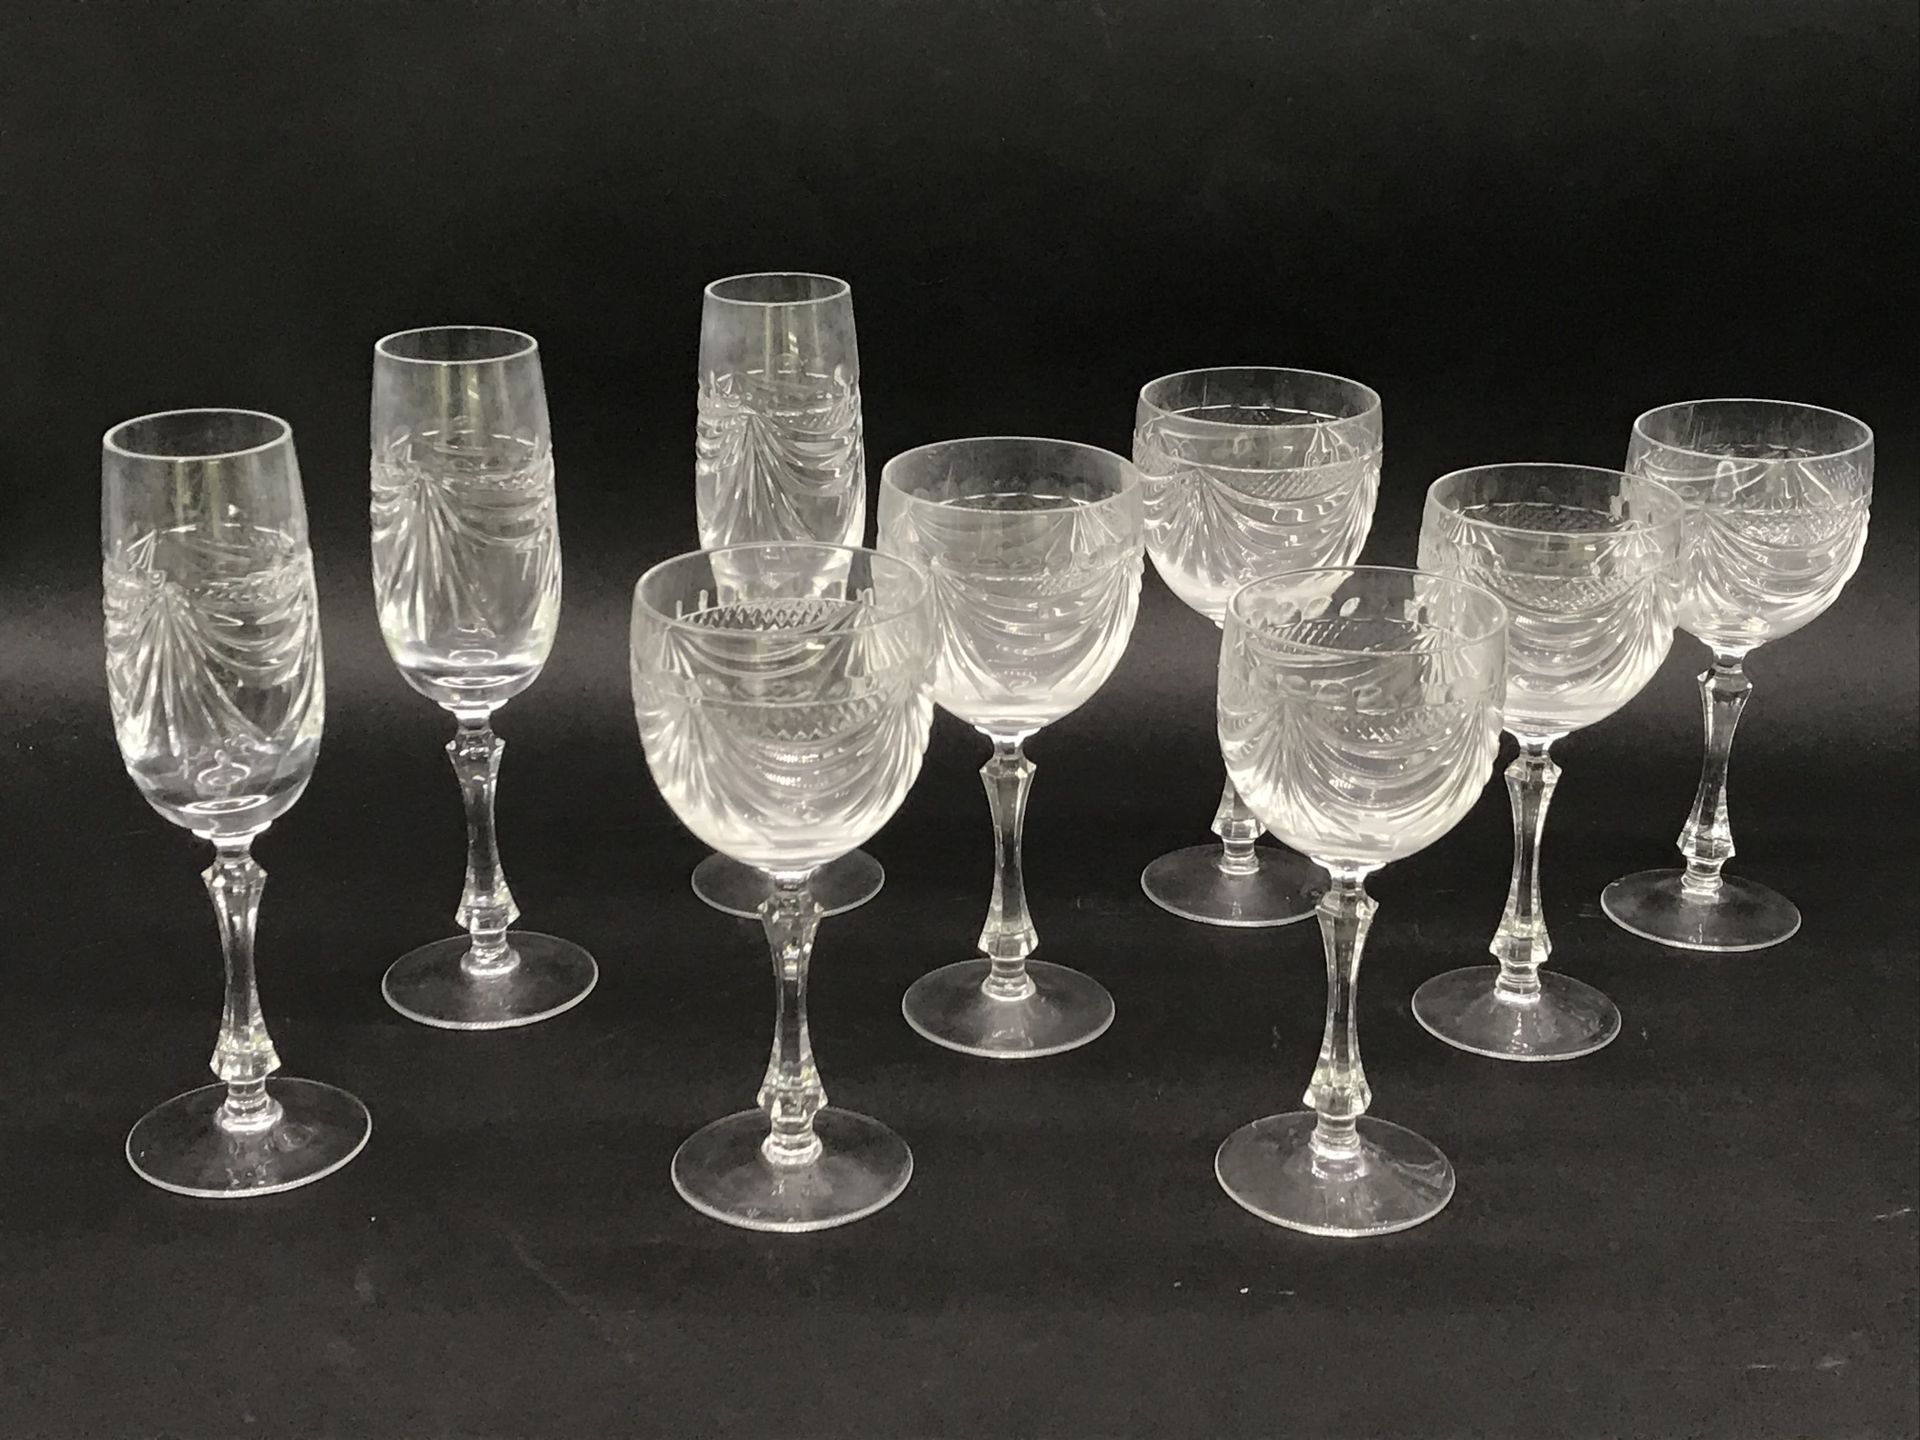 Null 洛林的水晶玻璃器皿

悬垂装饰的水晶杯服务

在脚下盖章

十二个水杯，高18厘米

十二个红酒杯 高17.5厘米

十二只香槟酒杯 高21.5厘米